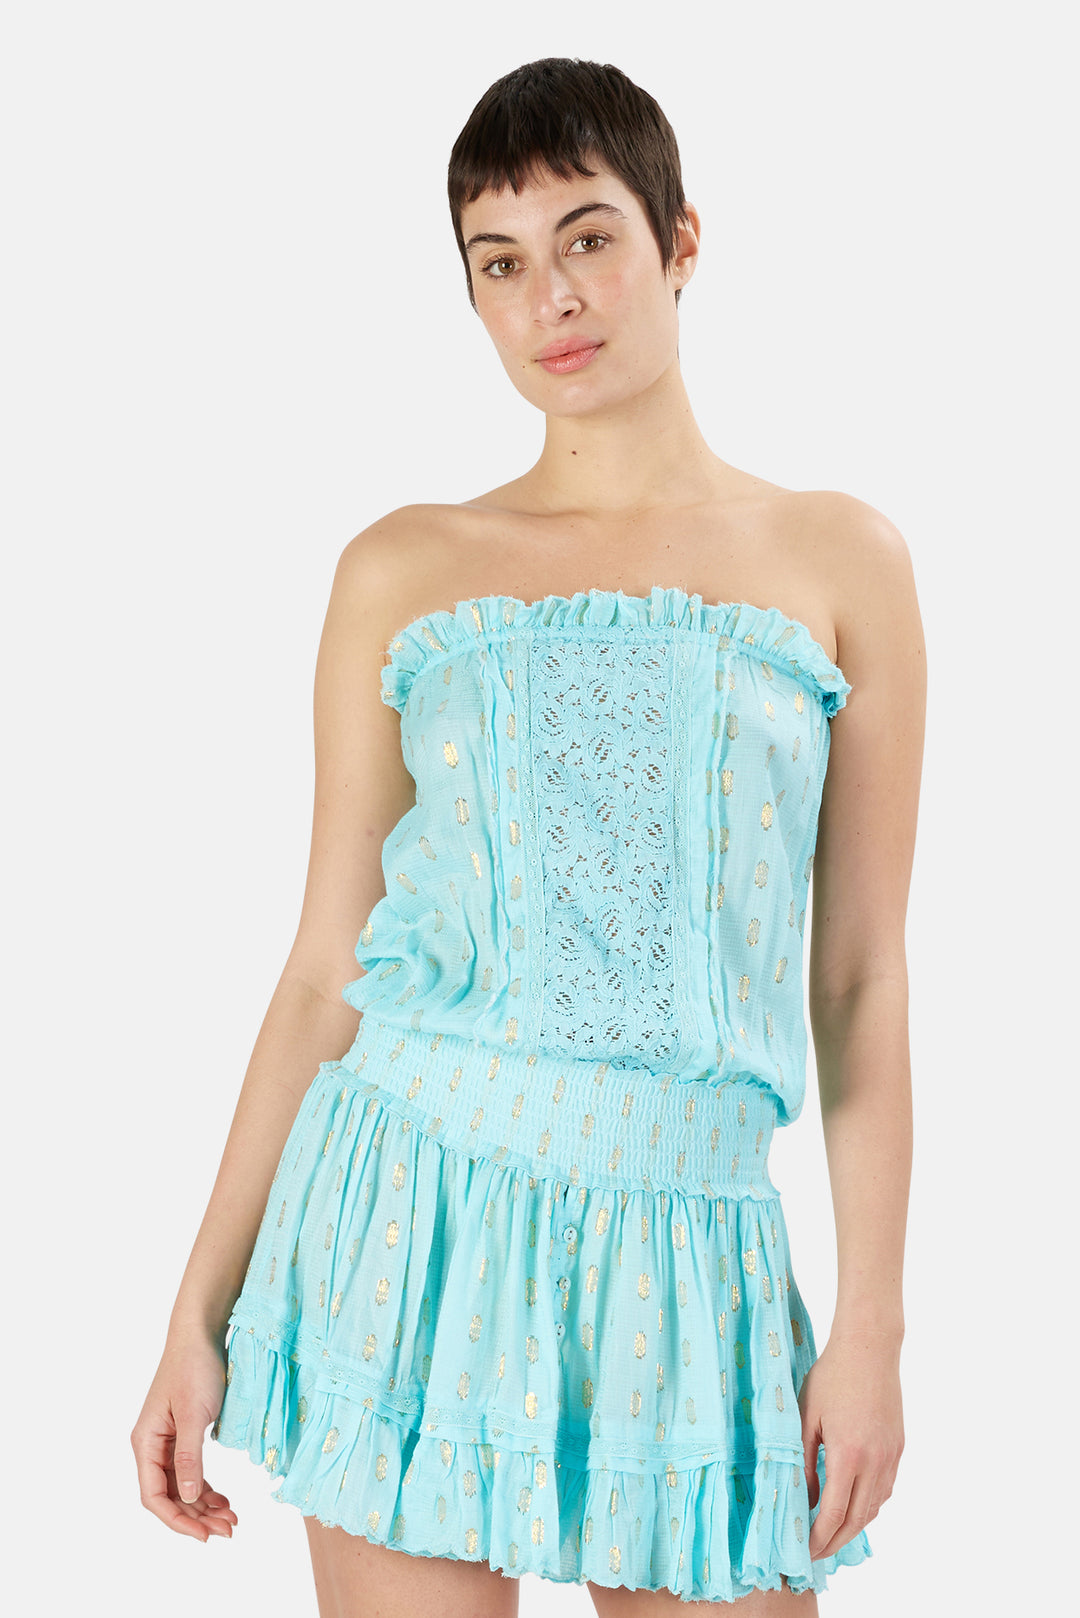 Malibu VI Pepite Dress Turquoise - blueandcream